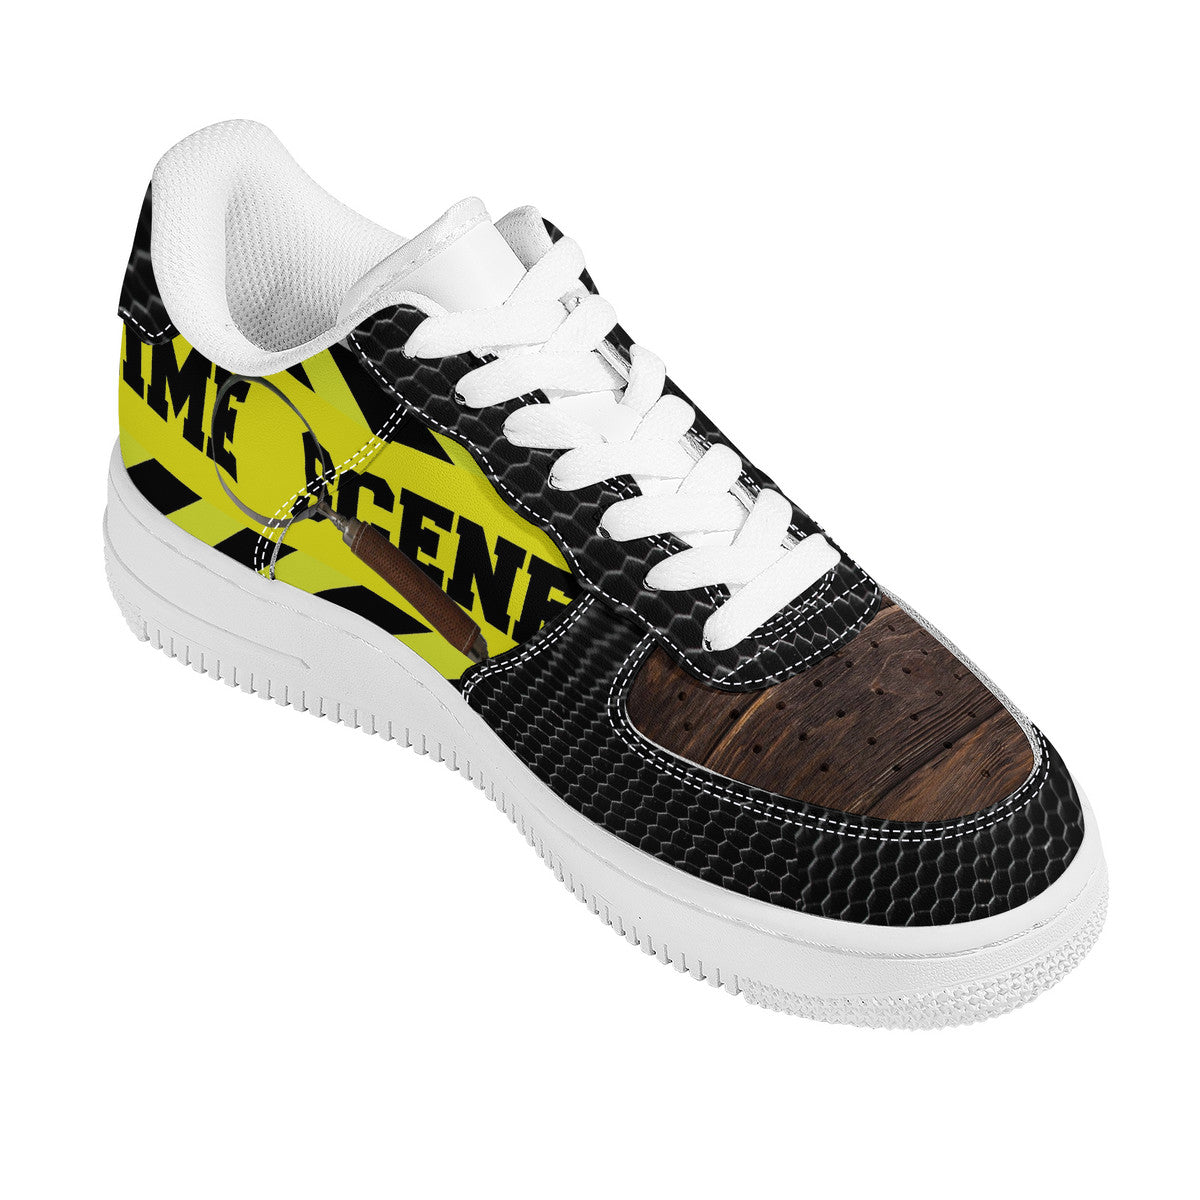 Crime Scene Unisex Sneaker | Low Top Customized | Shoe Zero